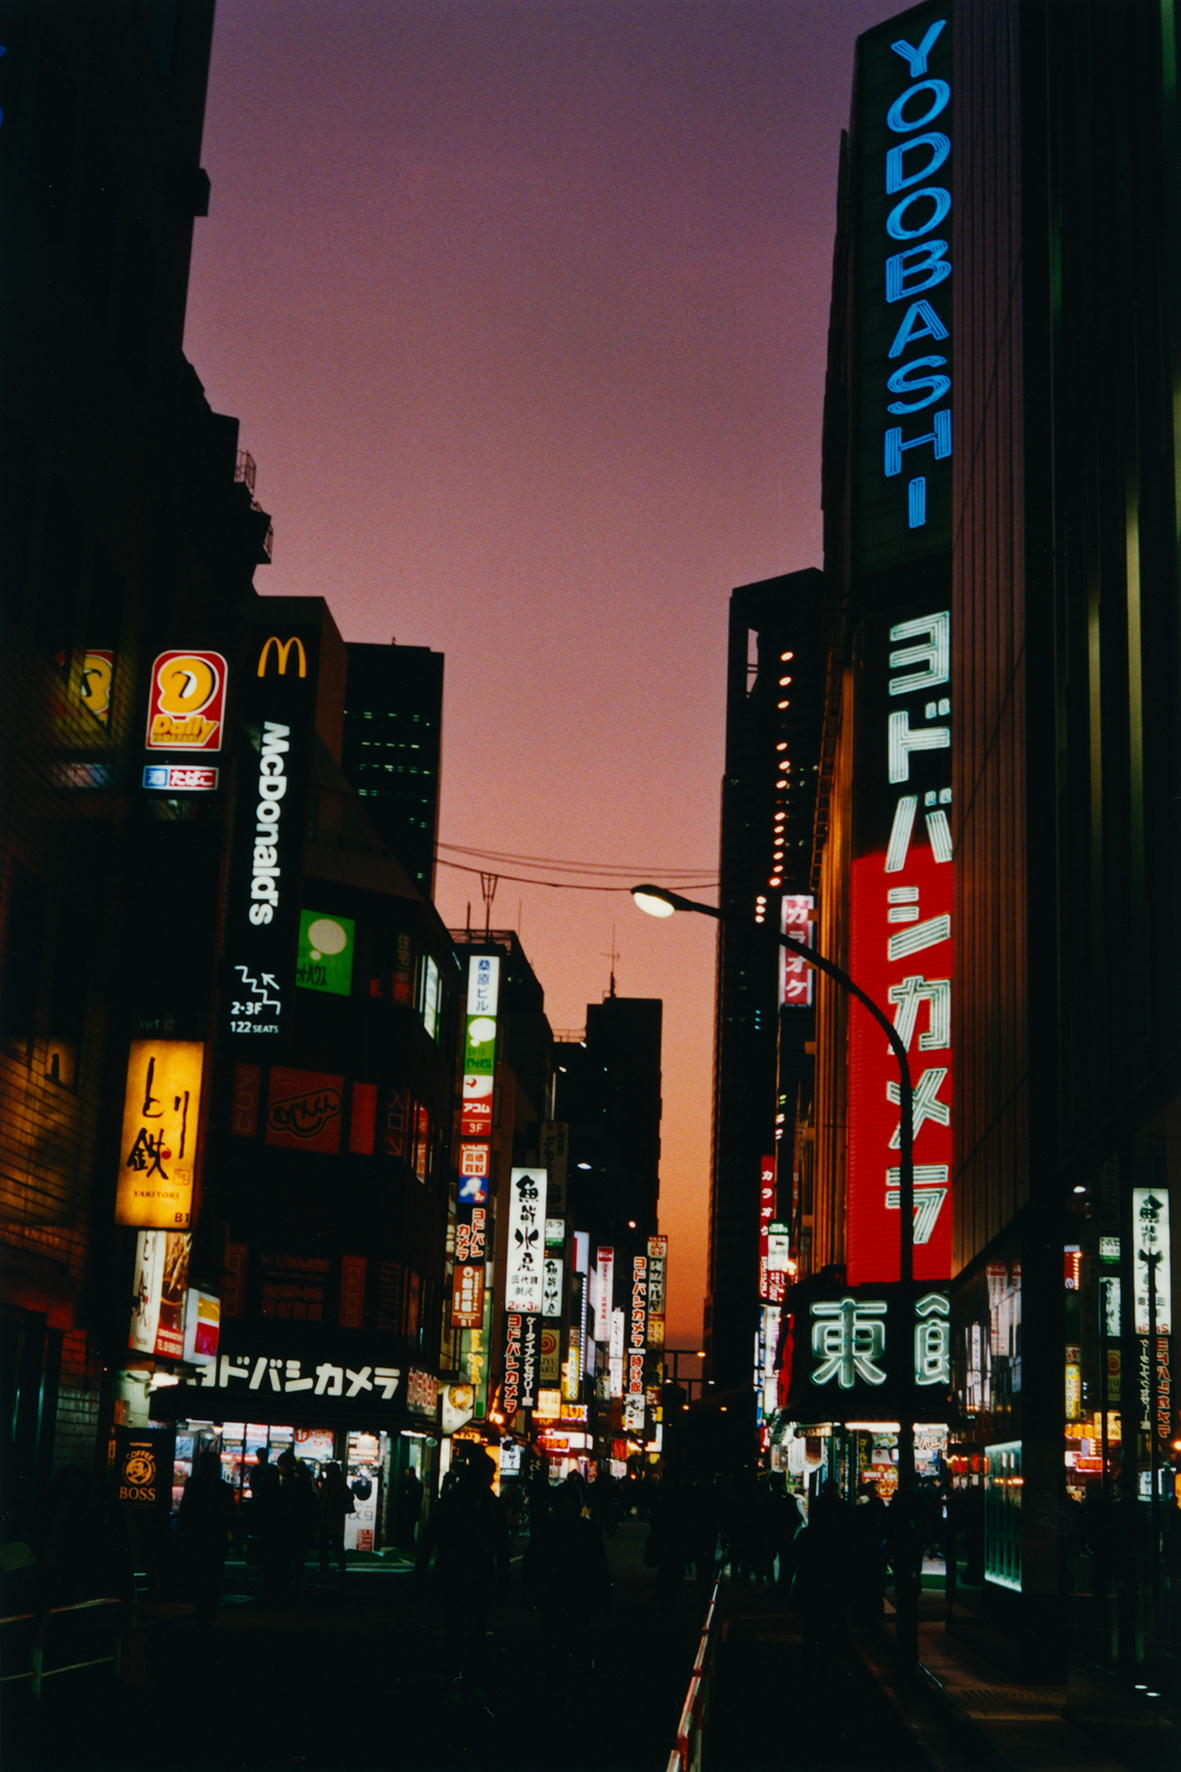  Tokyo 